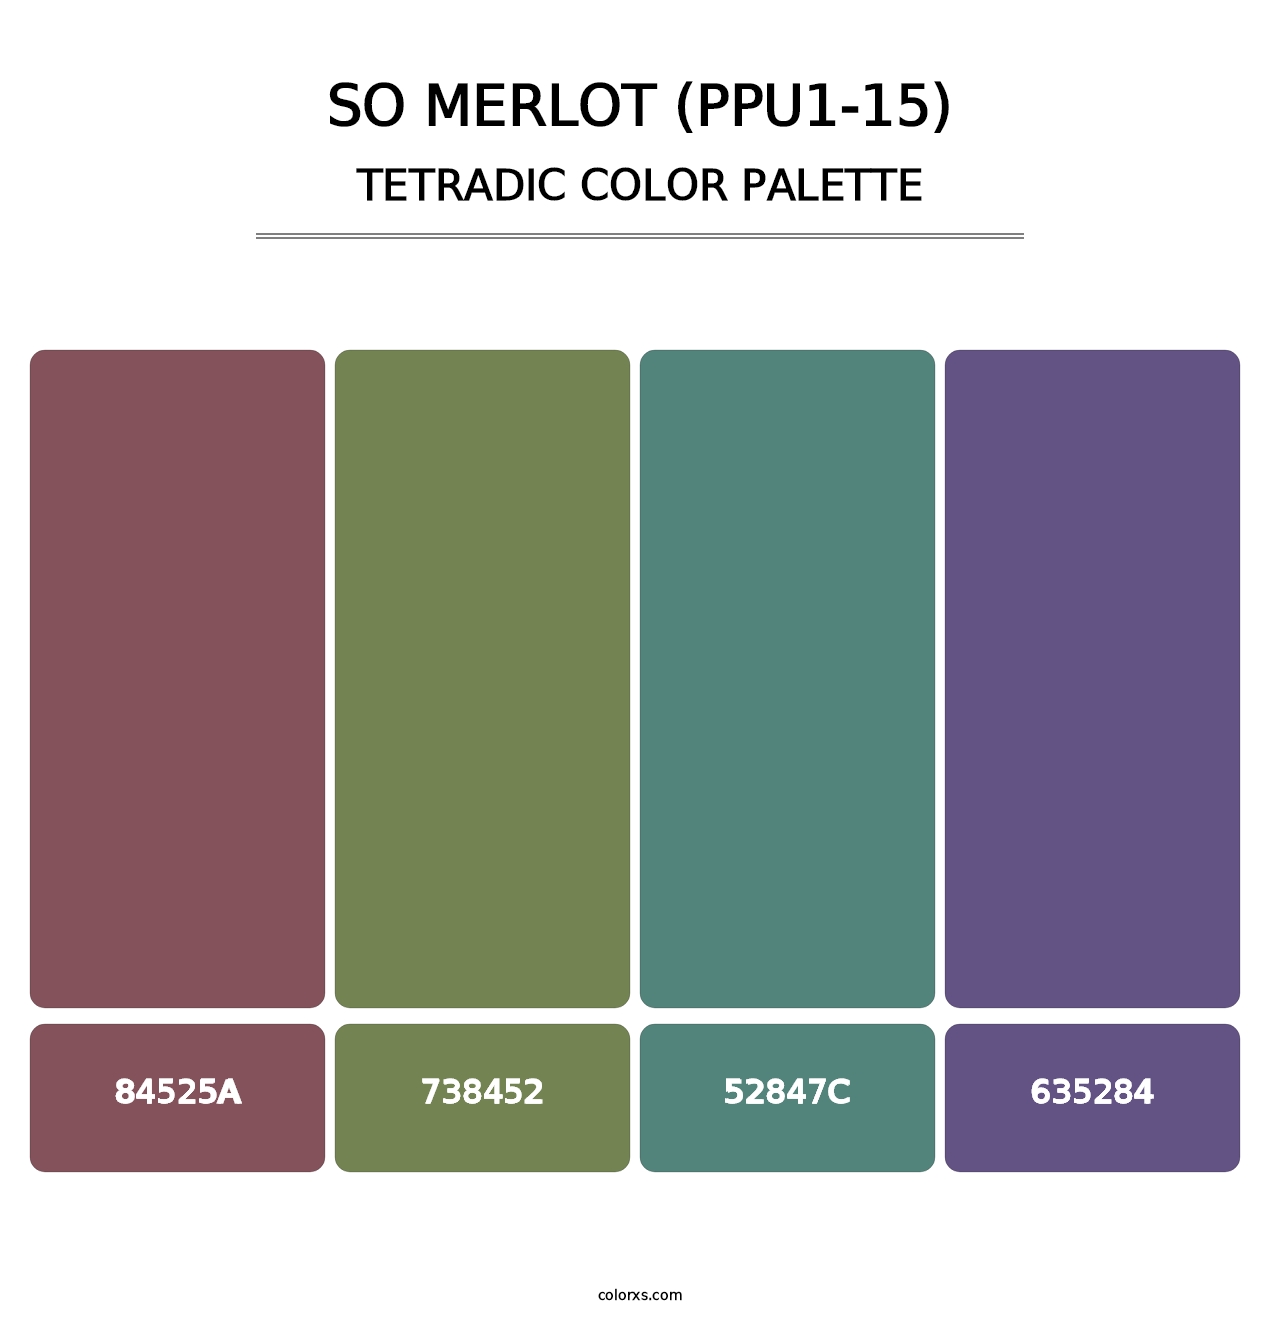 So Merlot (PPU1-15) - Tetradic Color Palette